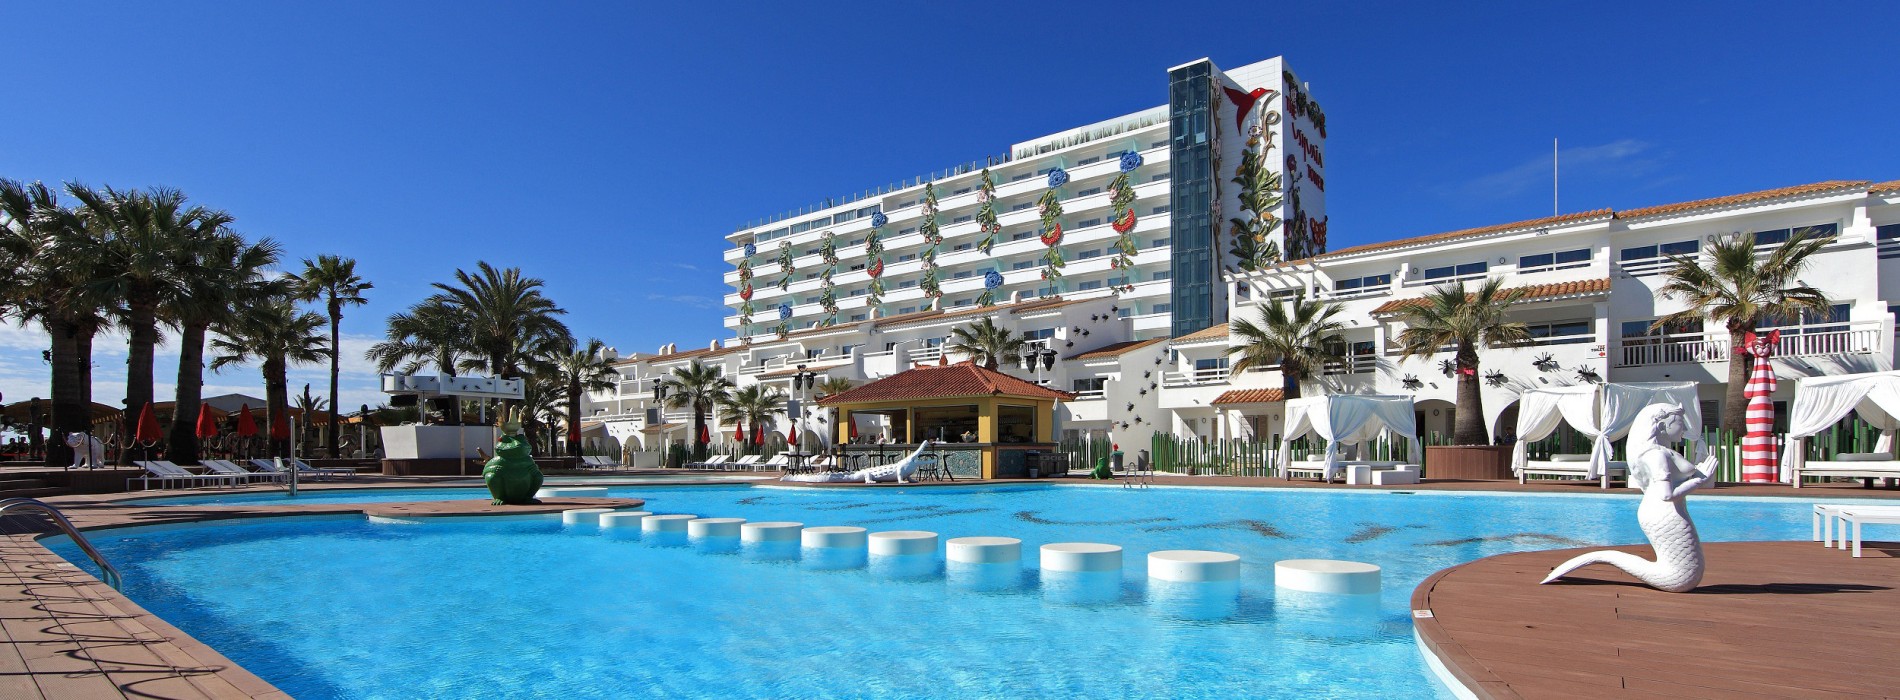 Ushuaïa Ibiza Beach Hotel unveils new websiteUshuaïa Ibiza Beach Hotel